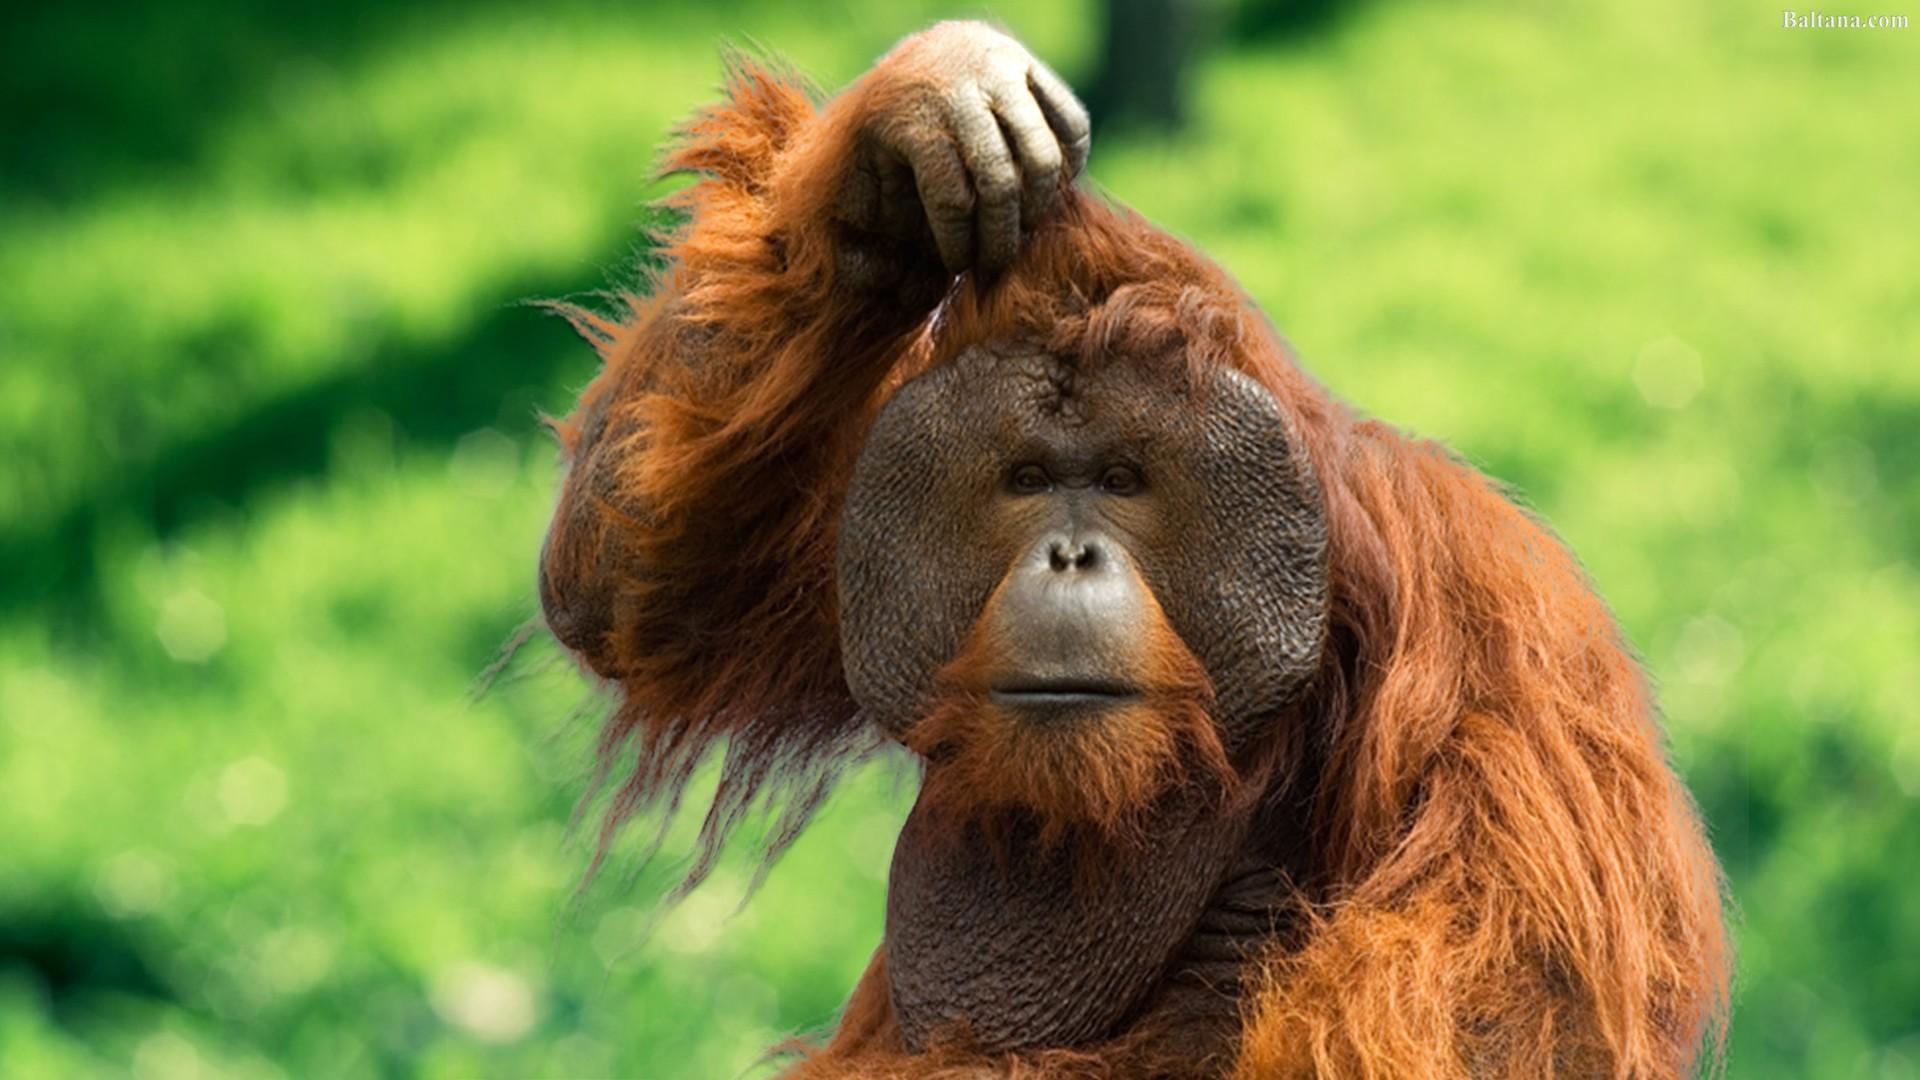 Orangutan Wallpaper HD Background, Image, Pics, Photo Free